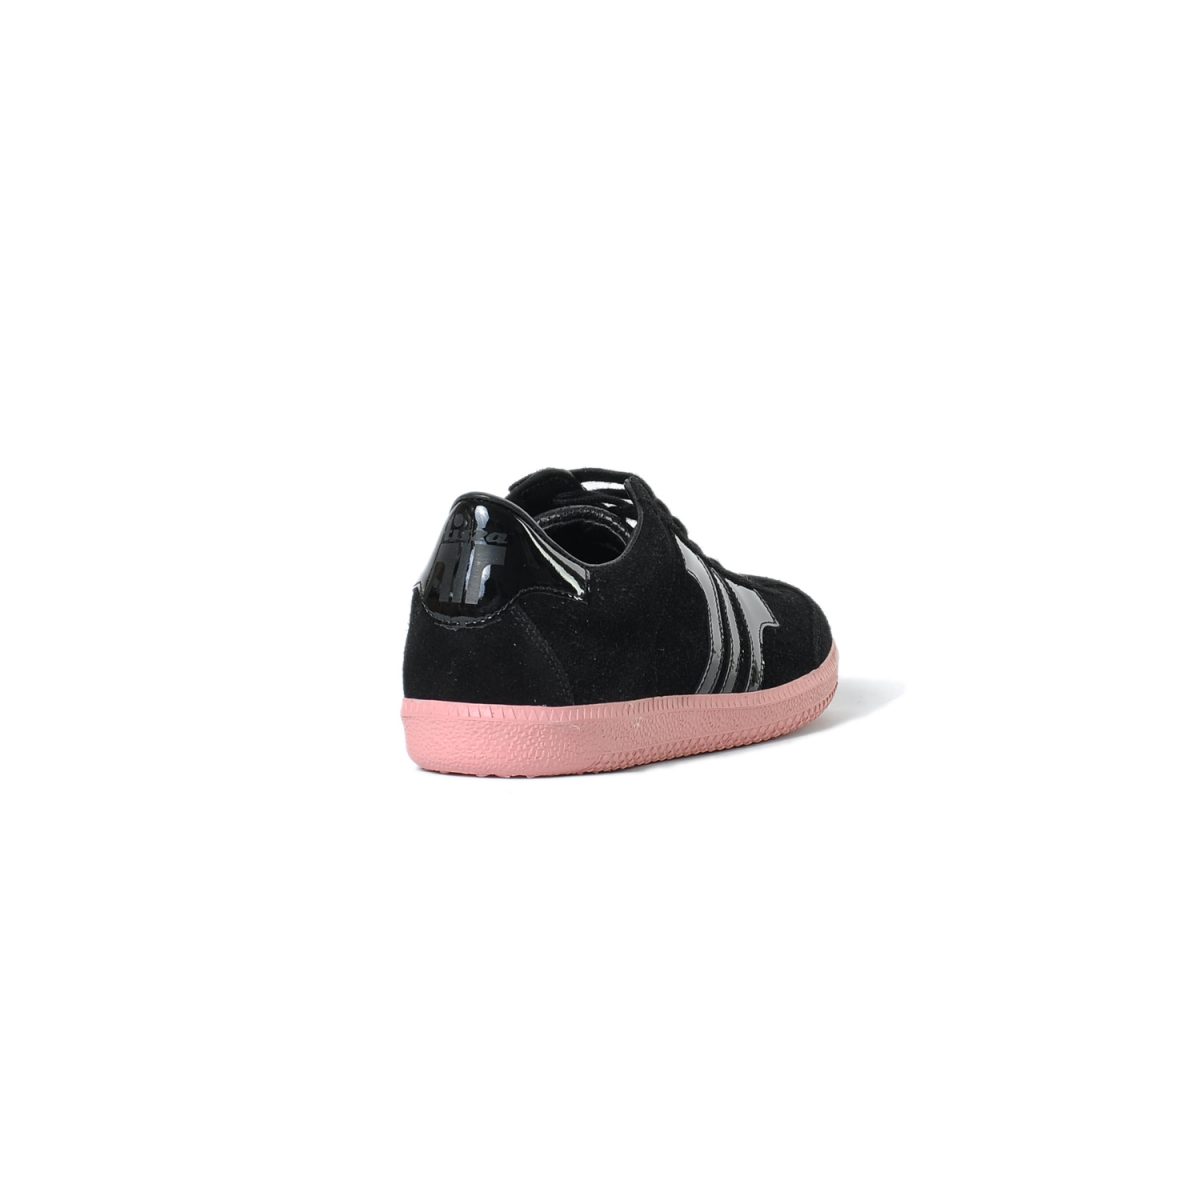 Tisza shoes - Comfort - Black-powder